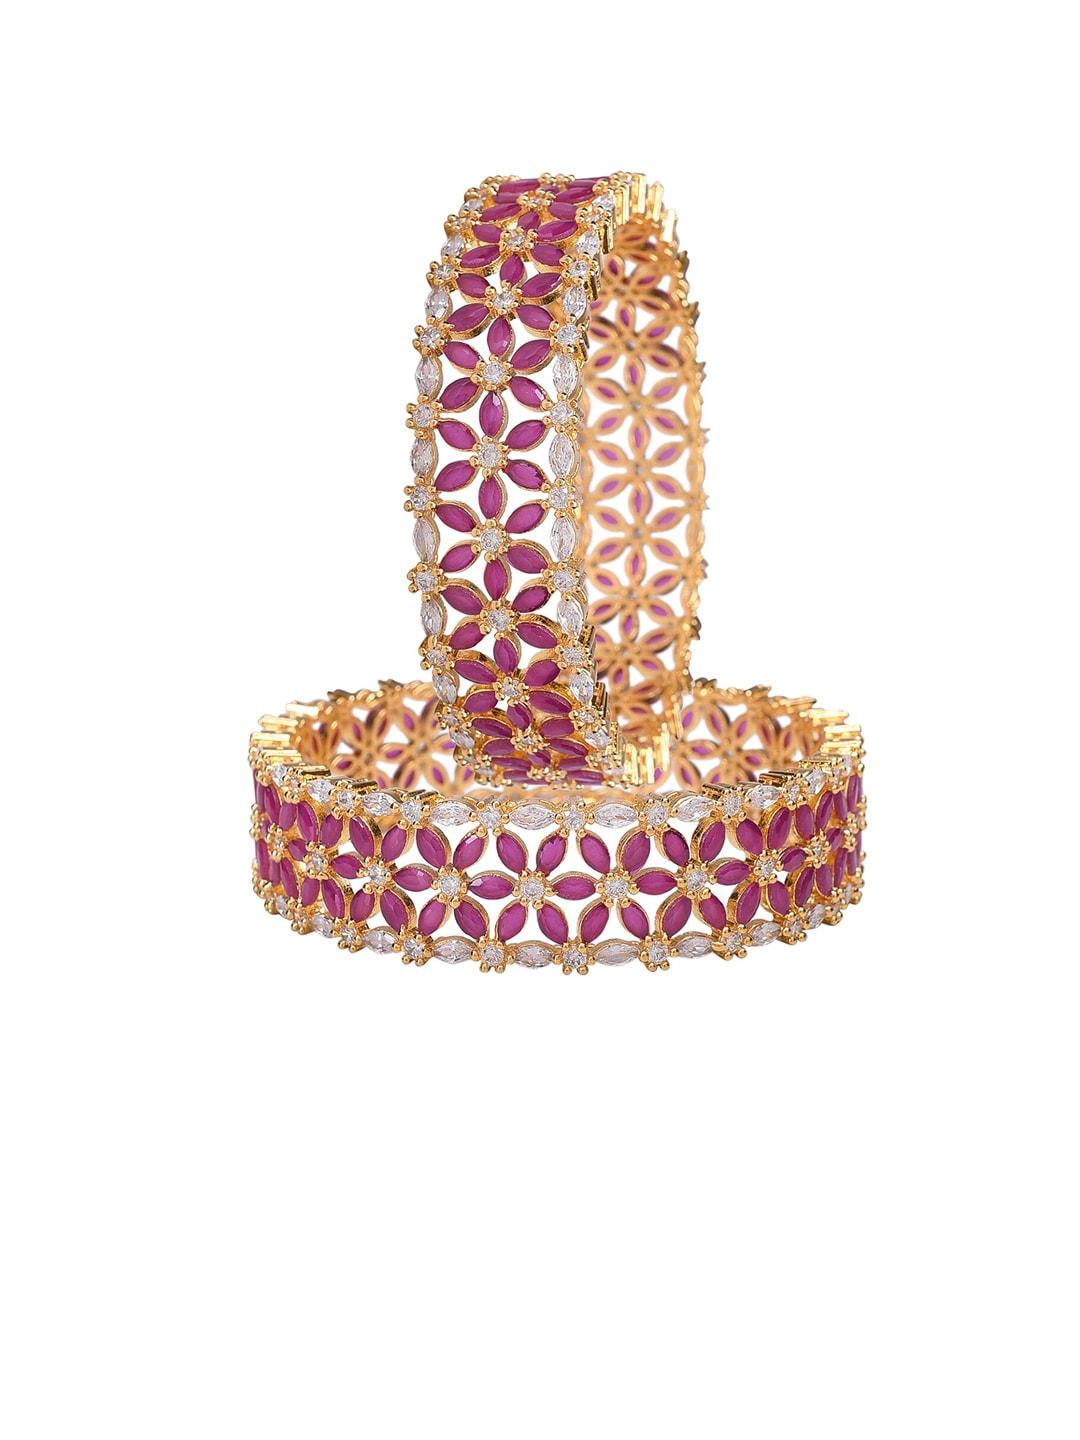 ratnavali jewels set of 2 gold-plated stone studded bangles